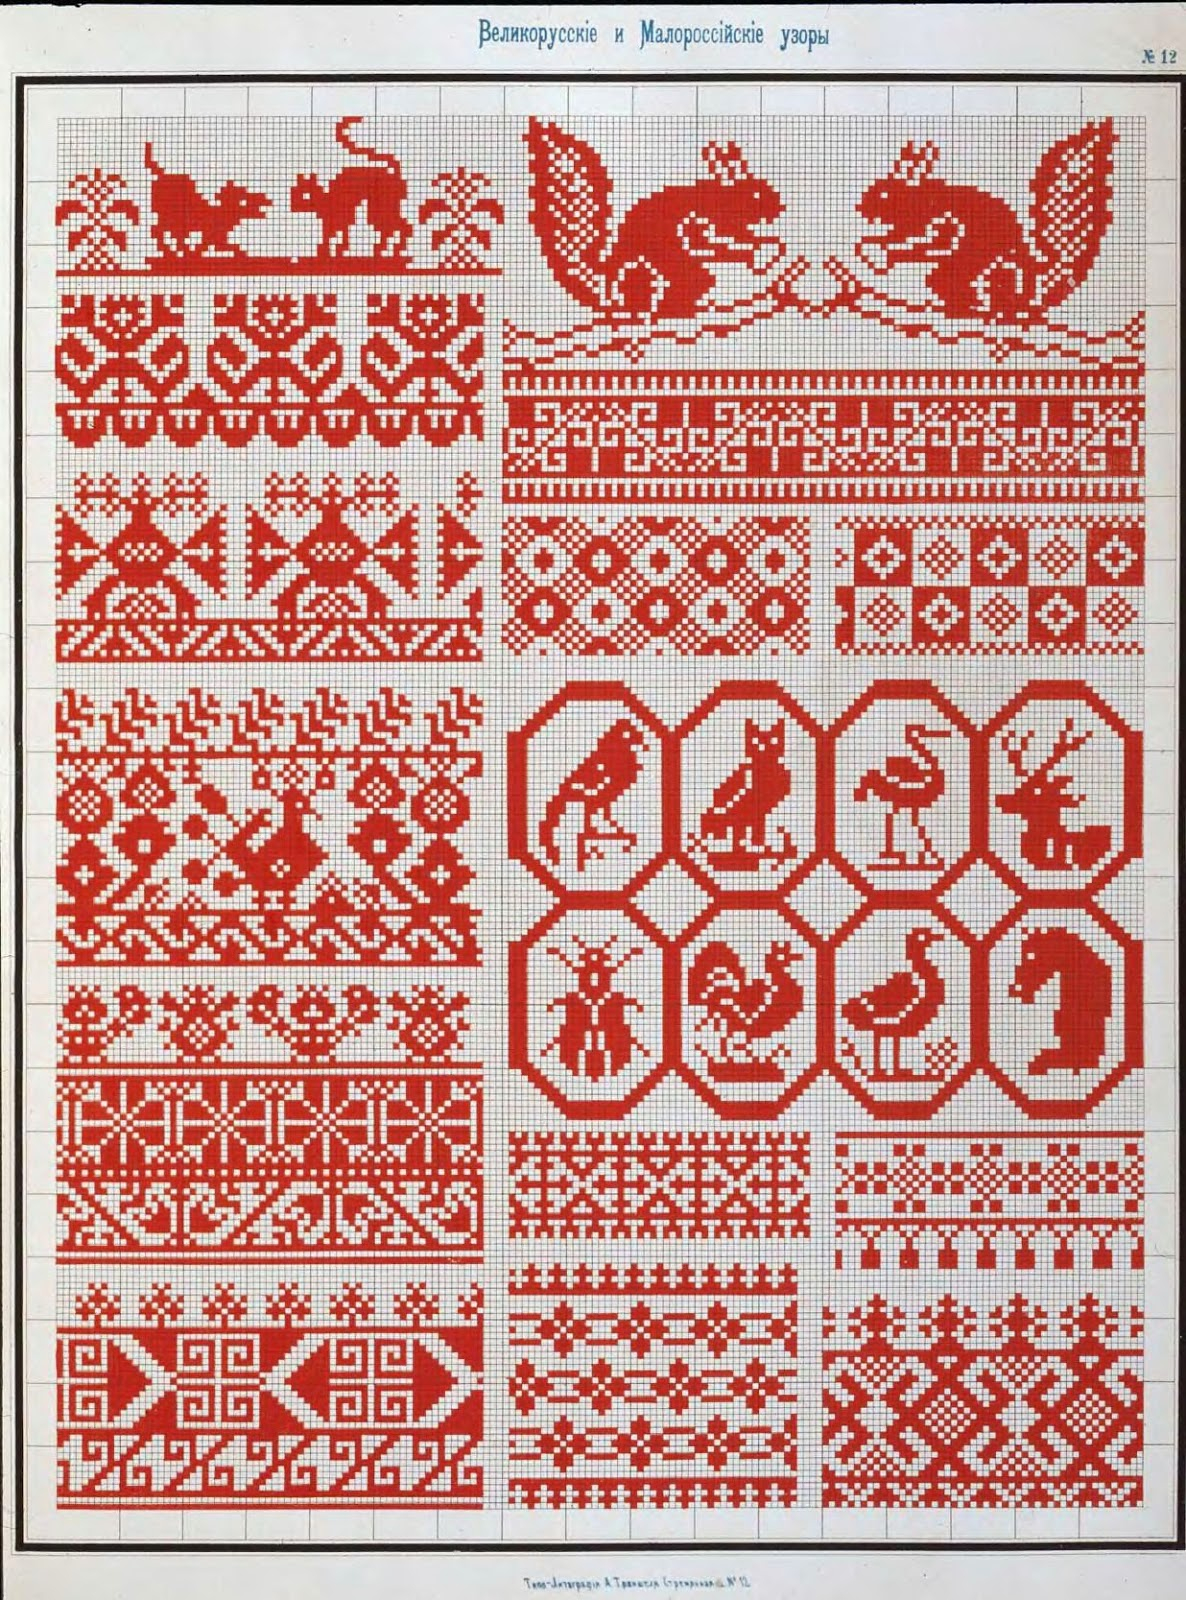 Russian Embroidery Patterns Folkcostumeembroidery Ukrainian Rose Embroidery